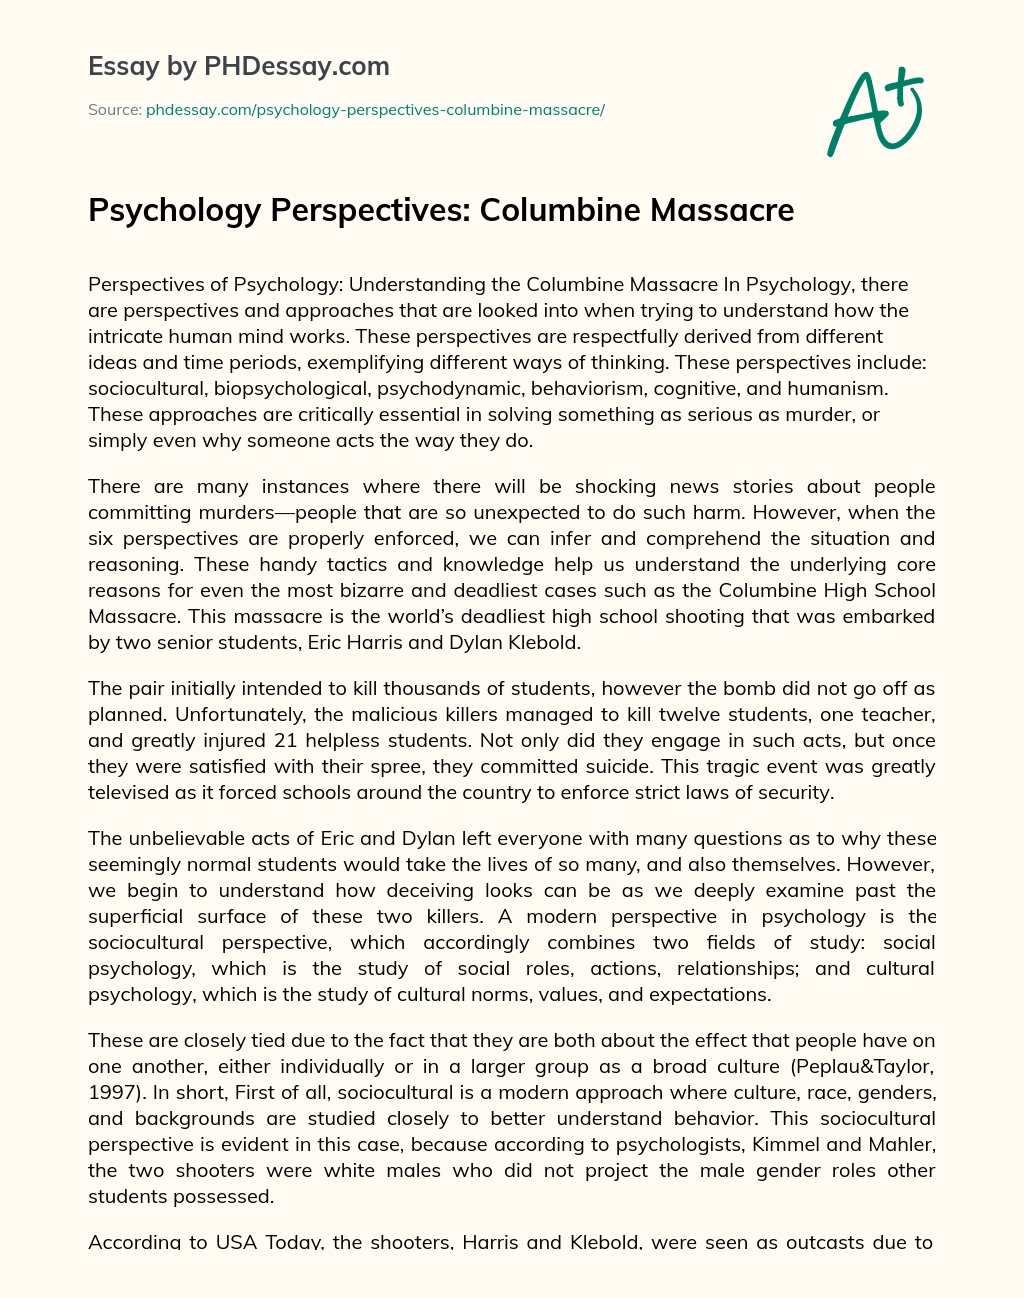 Psychology Perspectives: Columbine Massacre essay